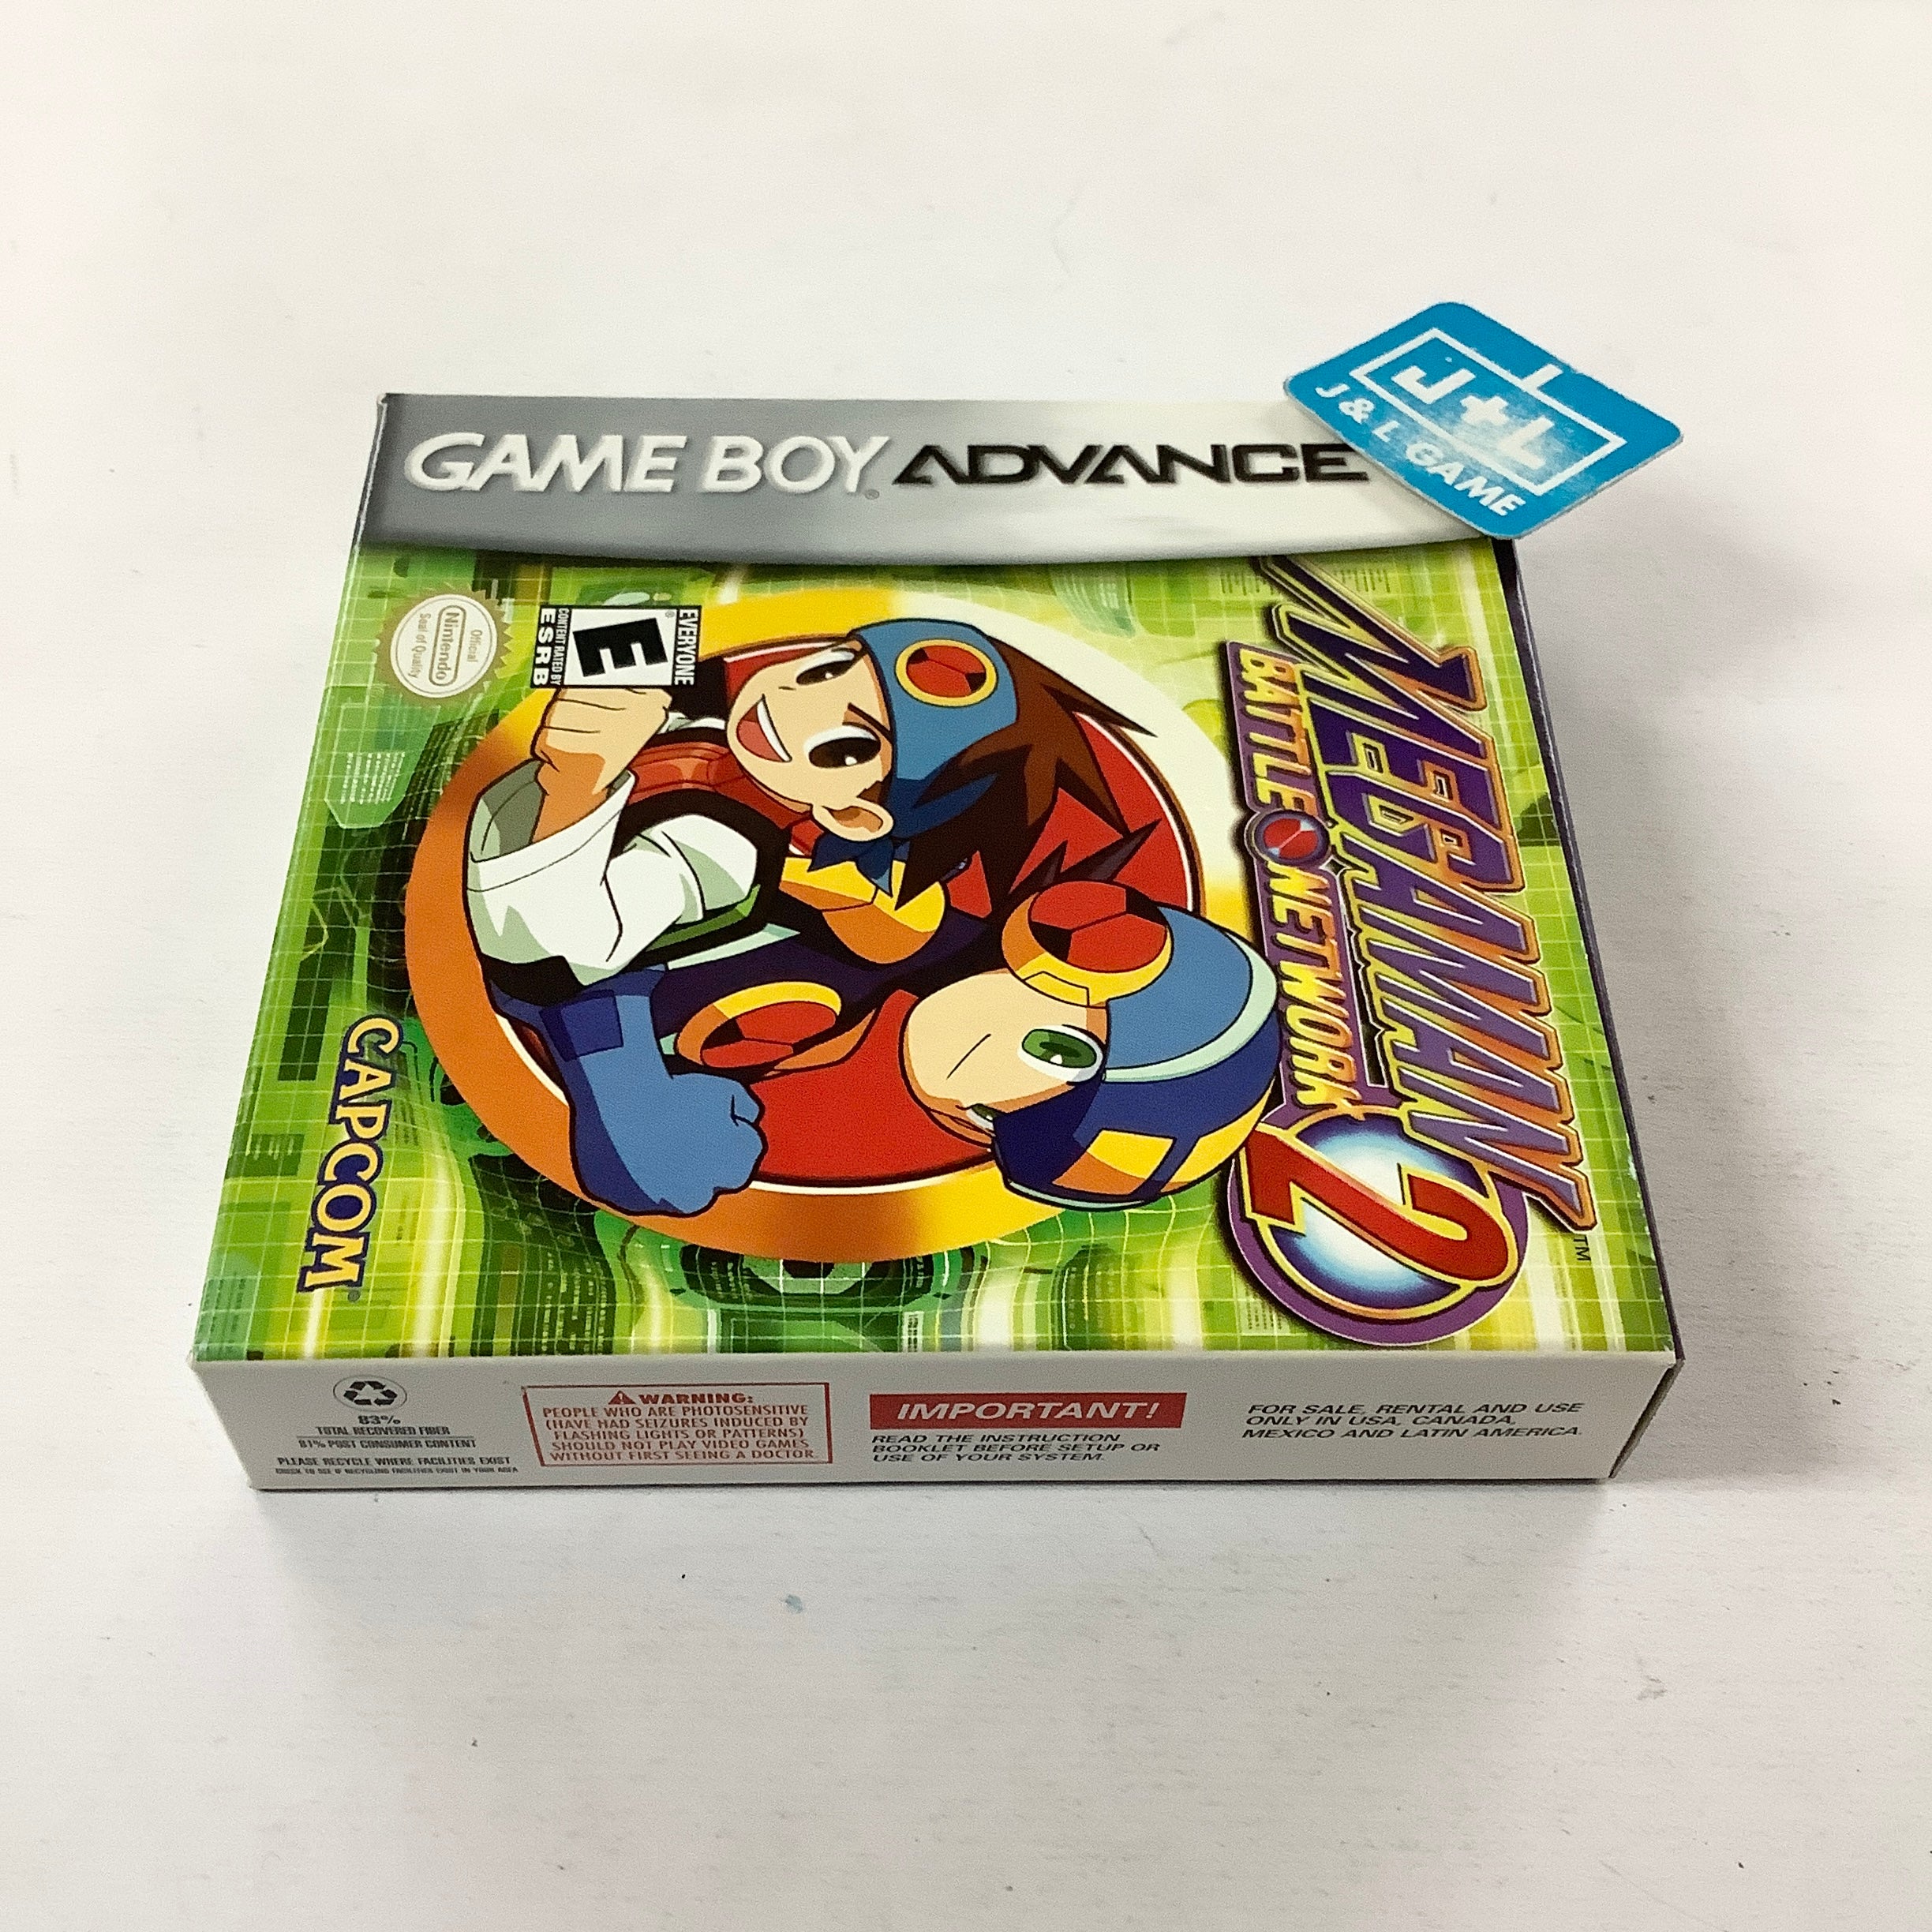 Mega Man Battle Network 2 - (GBA) Game Boy Advance [Pre-Owned] Video Games Capcom   